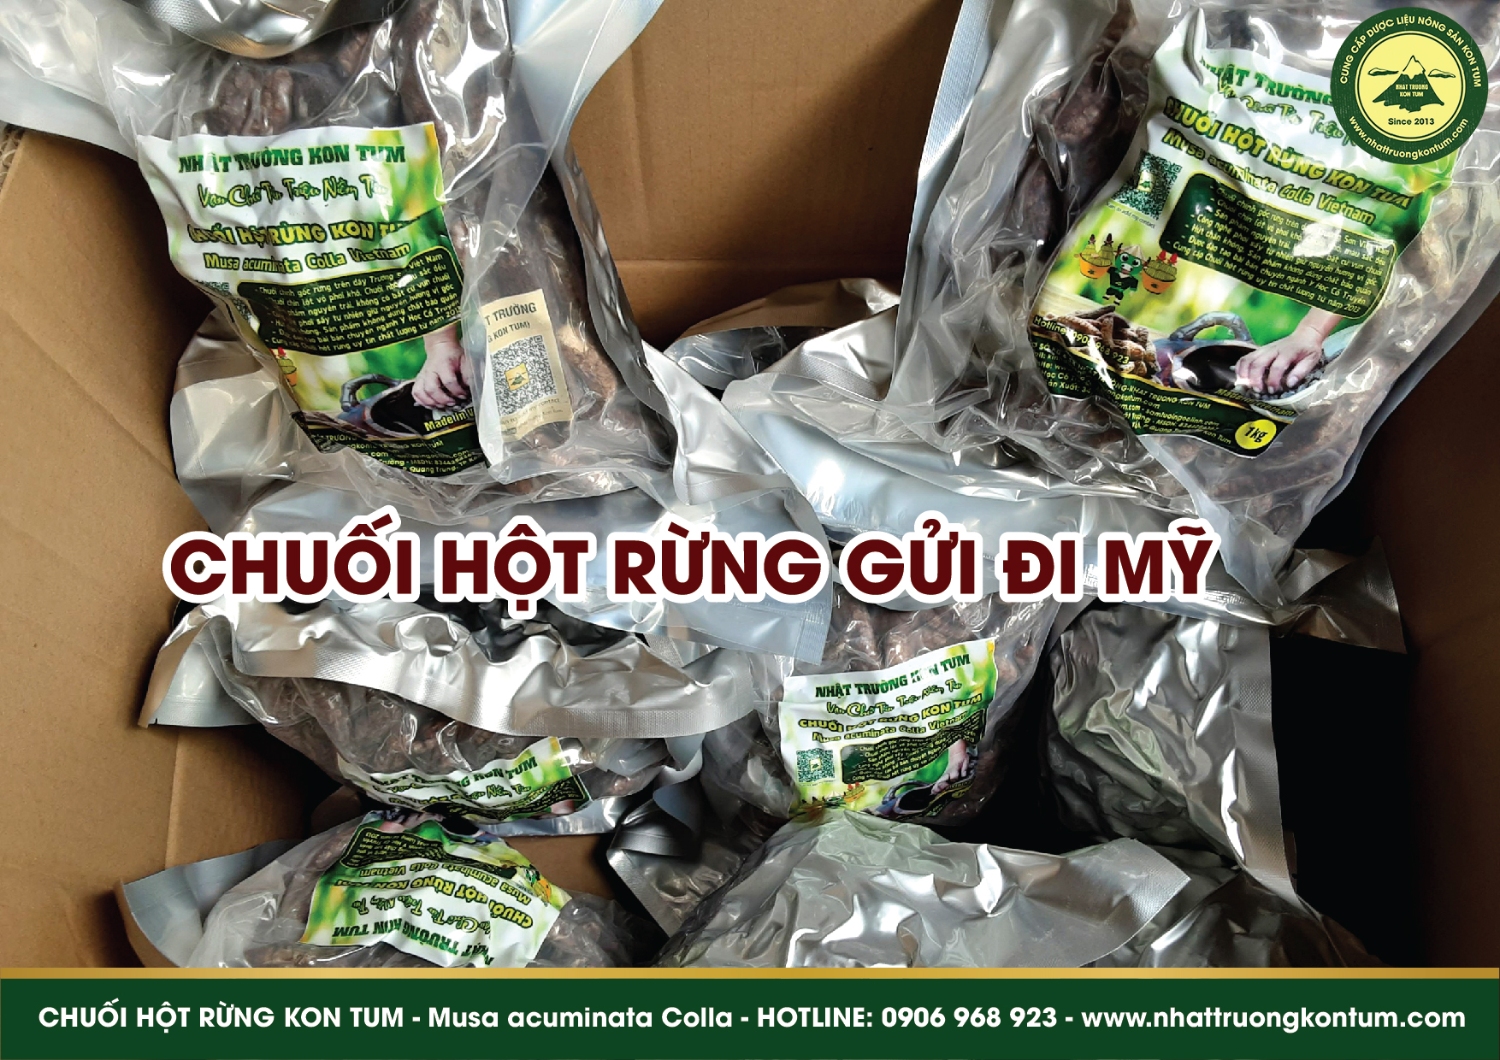 chuoi hot rung nhat truong kon tum gui di my 02